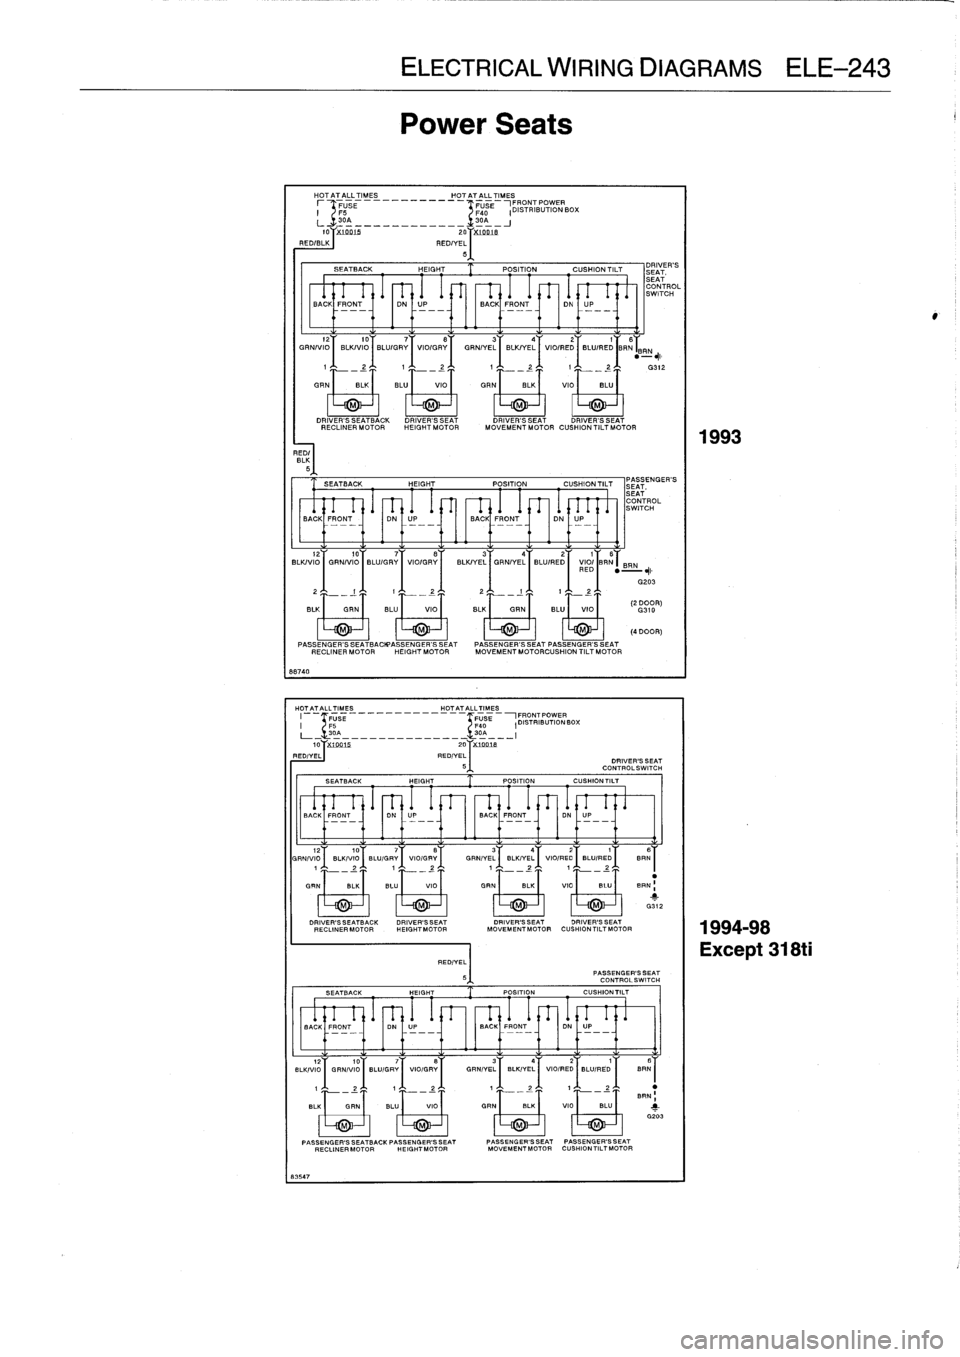 BMW 323i 1993 E36 Workshop Manual 
HOTATA_LL_TIM_E_S
________HO_TAT_AL
_
LT_IMES
FUSE

	

~~~jjj
```
FUSE

	

FRONT
POWER
F5

	

F40

	

I
DISTRIBUTION
BOX
IF

	

________
_
30A
-J
10
XLDQLS

	

20Y
XI0018
RED/BLK

	

RED/VEL
5

GRNI